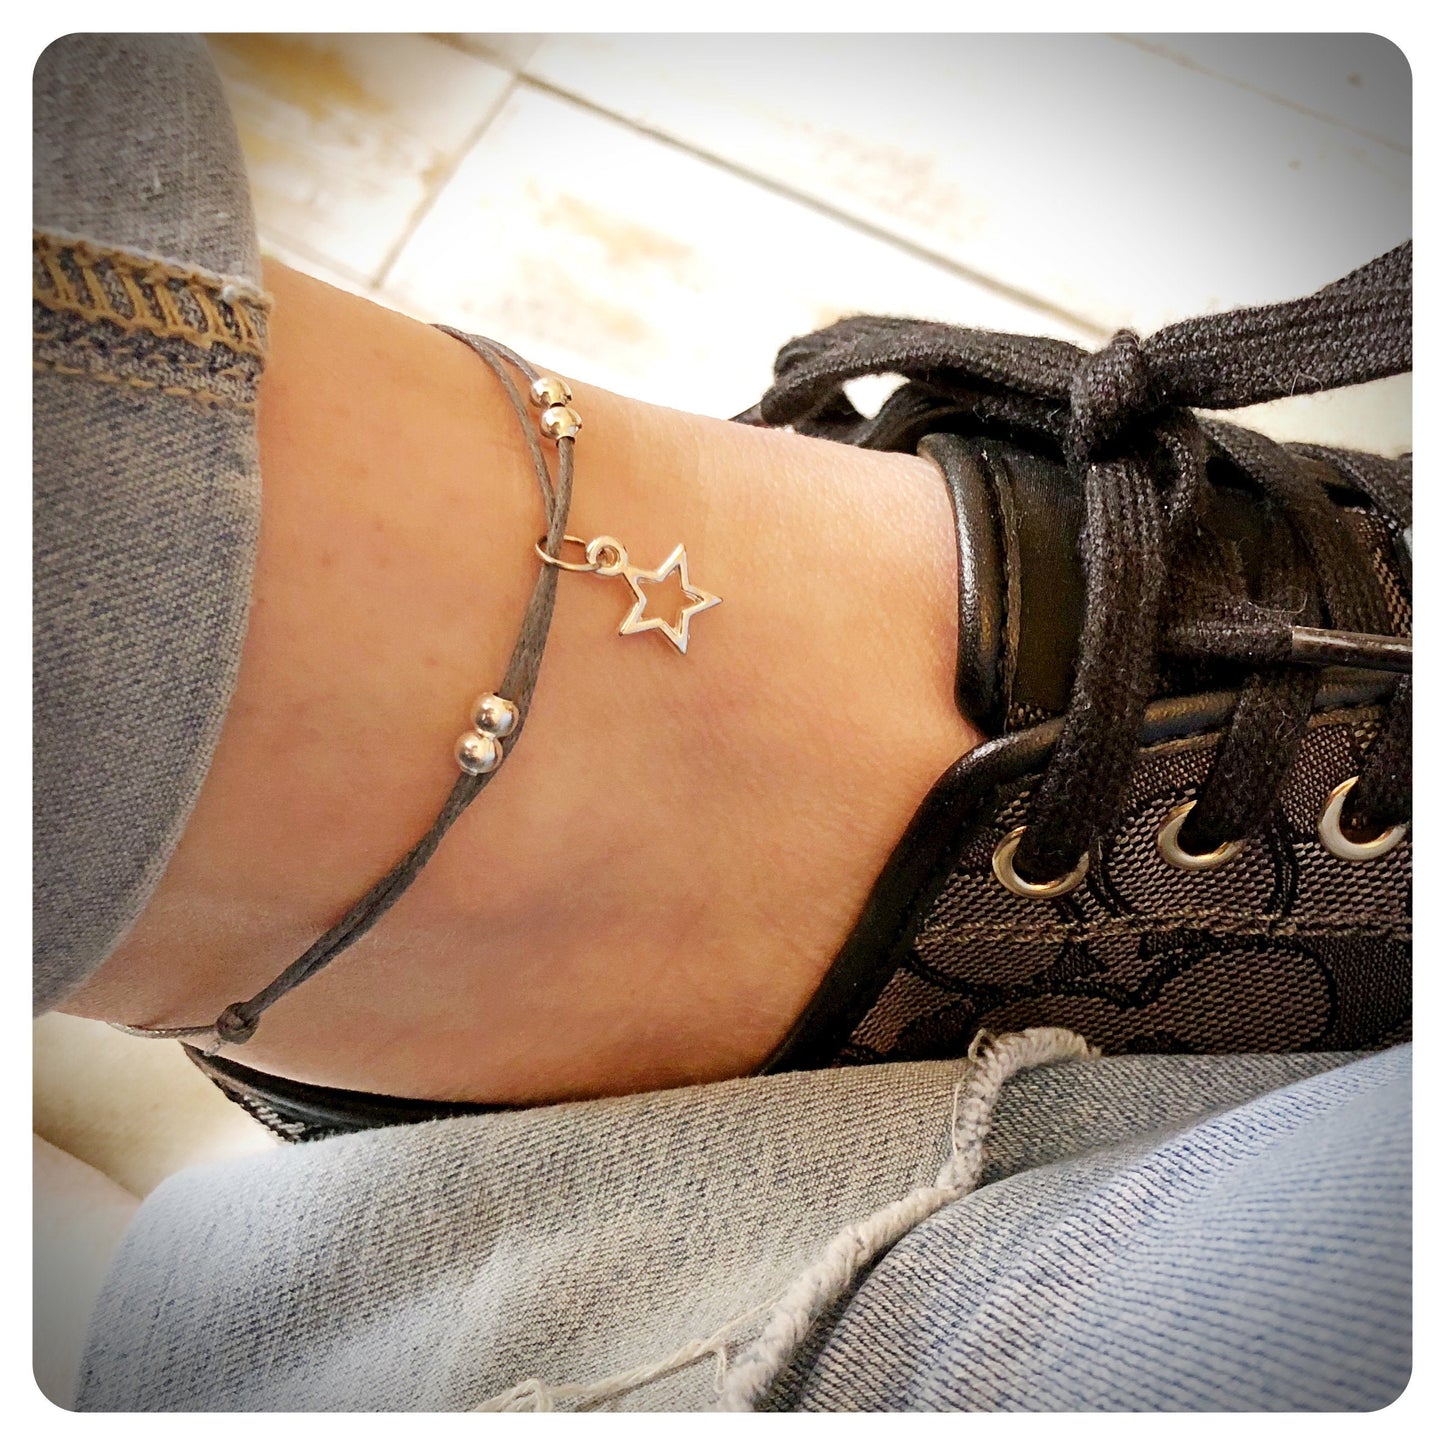 Adjustable Cord Anklet, Beaded Star Ankle Bracelet, Beach Jewellery, Festival Accessory